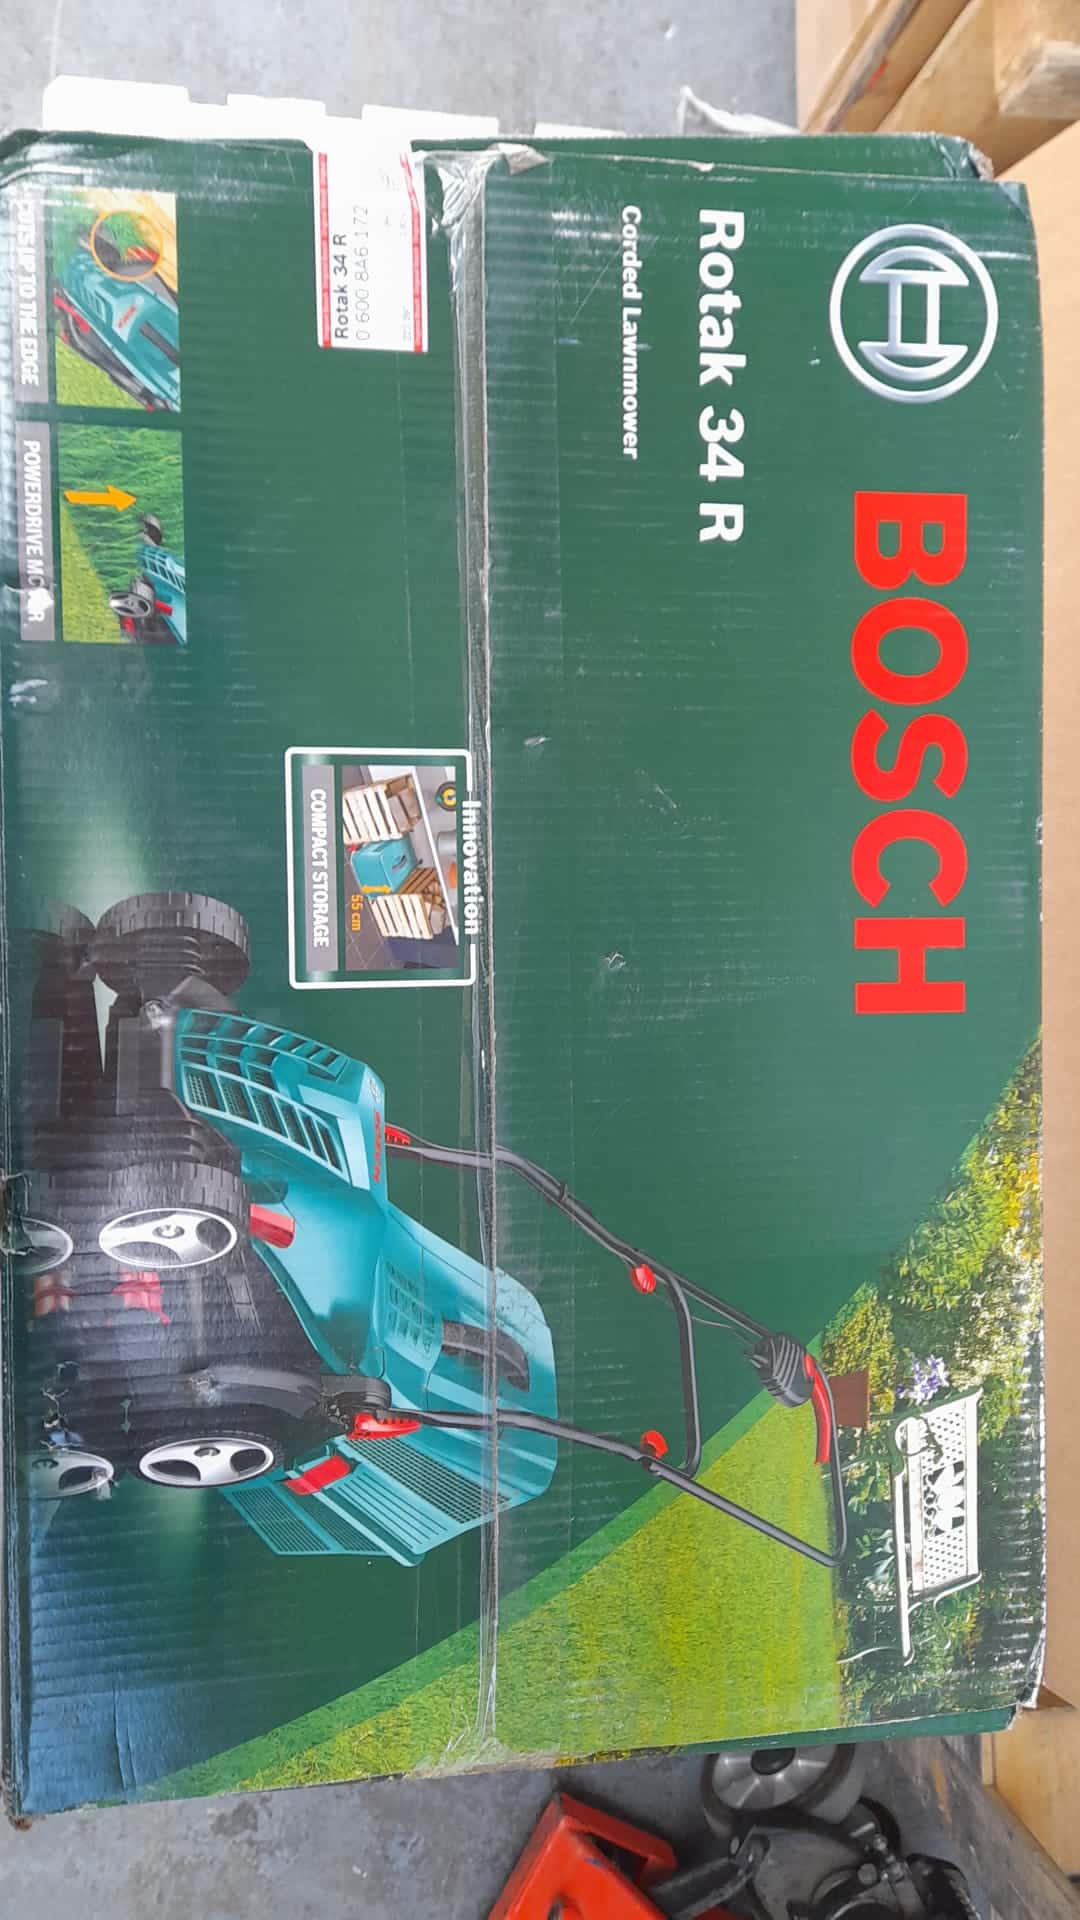 Bosch Rotak 34 R Corded Electric Rotary Lawnmower 6472